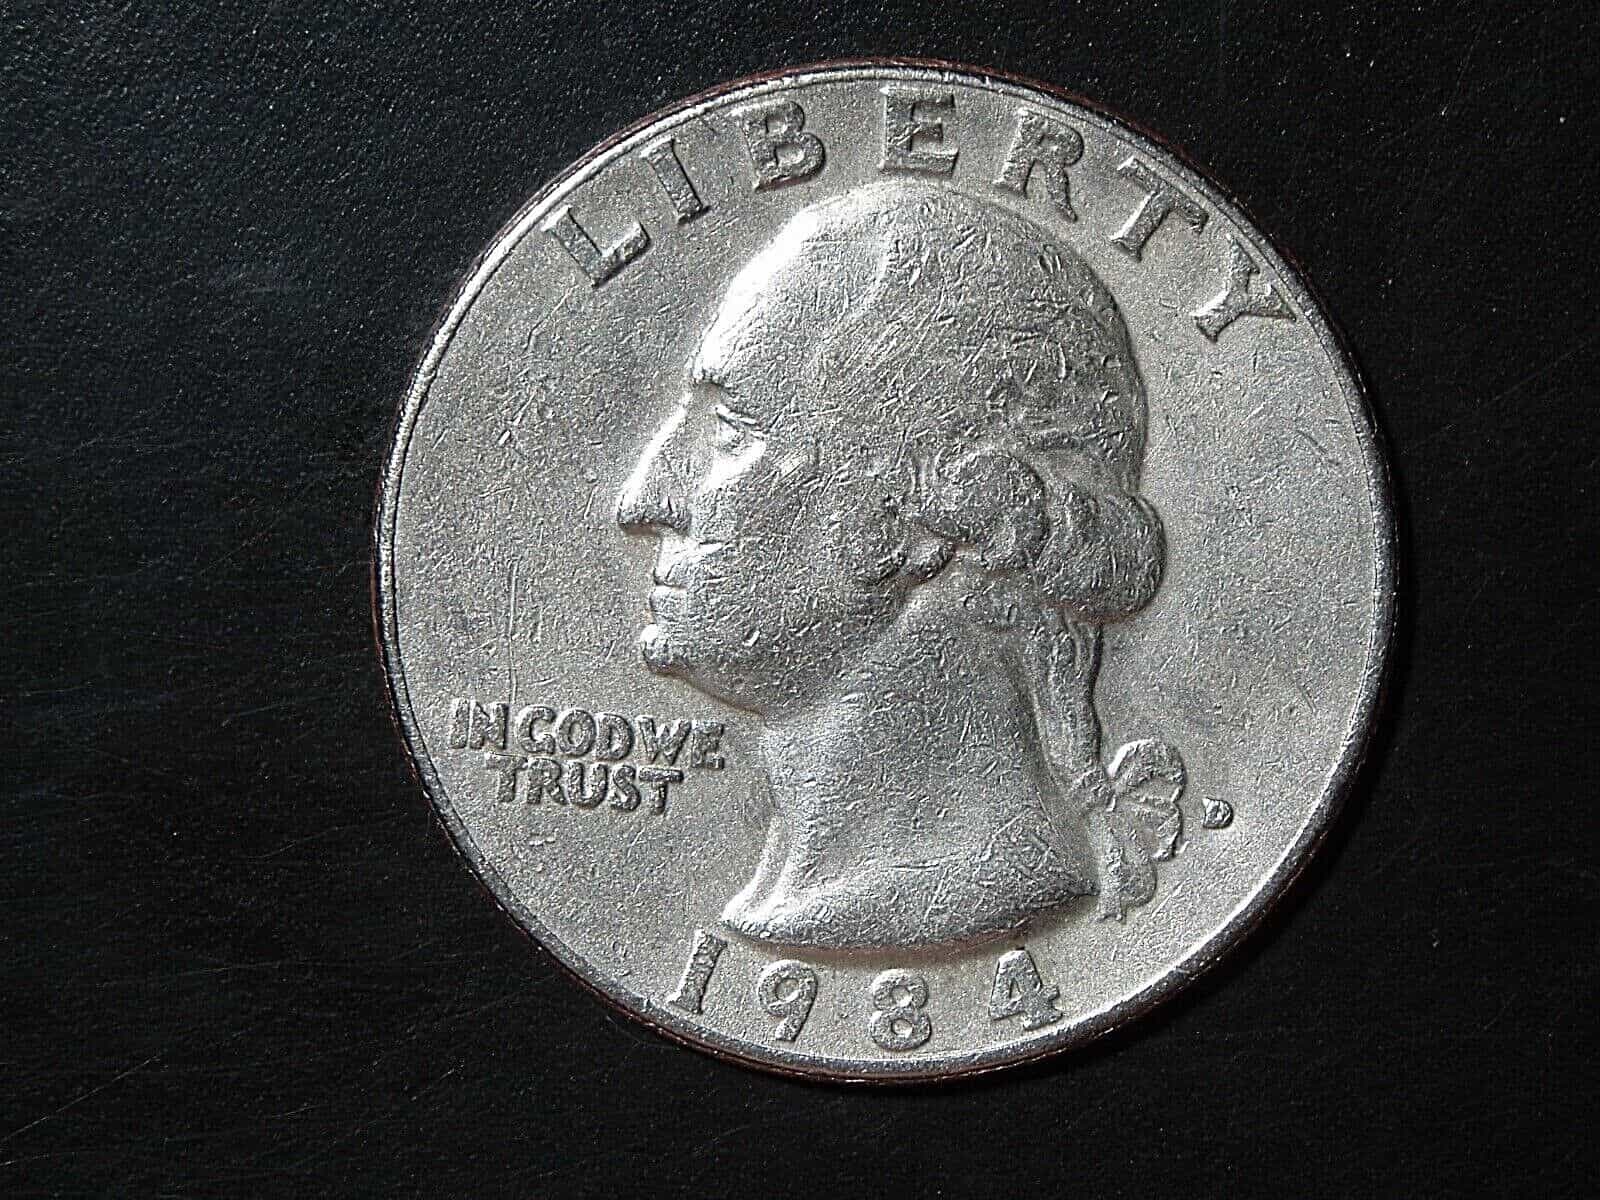 1984 “D” Quarter